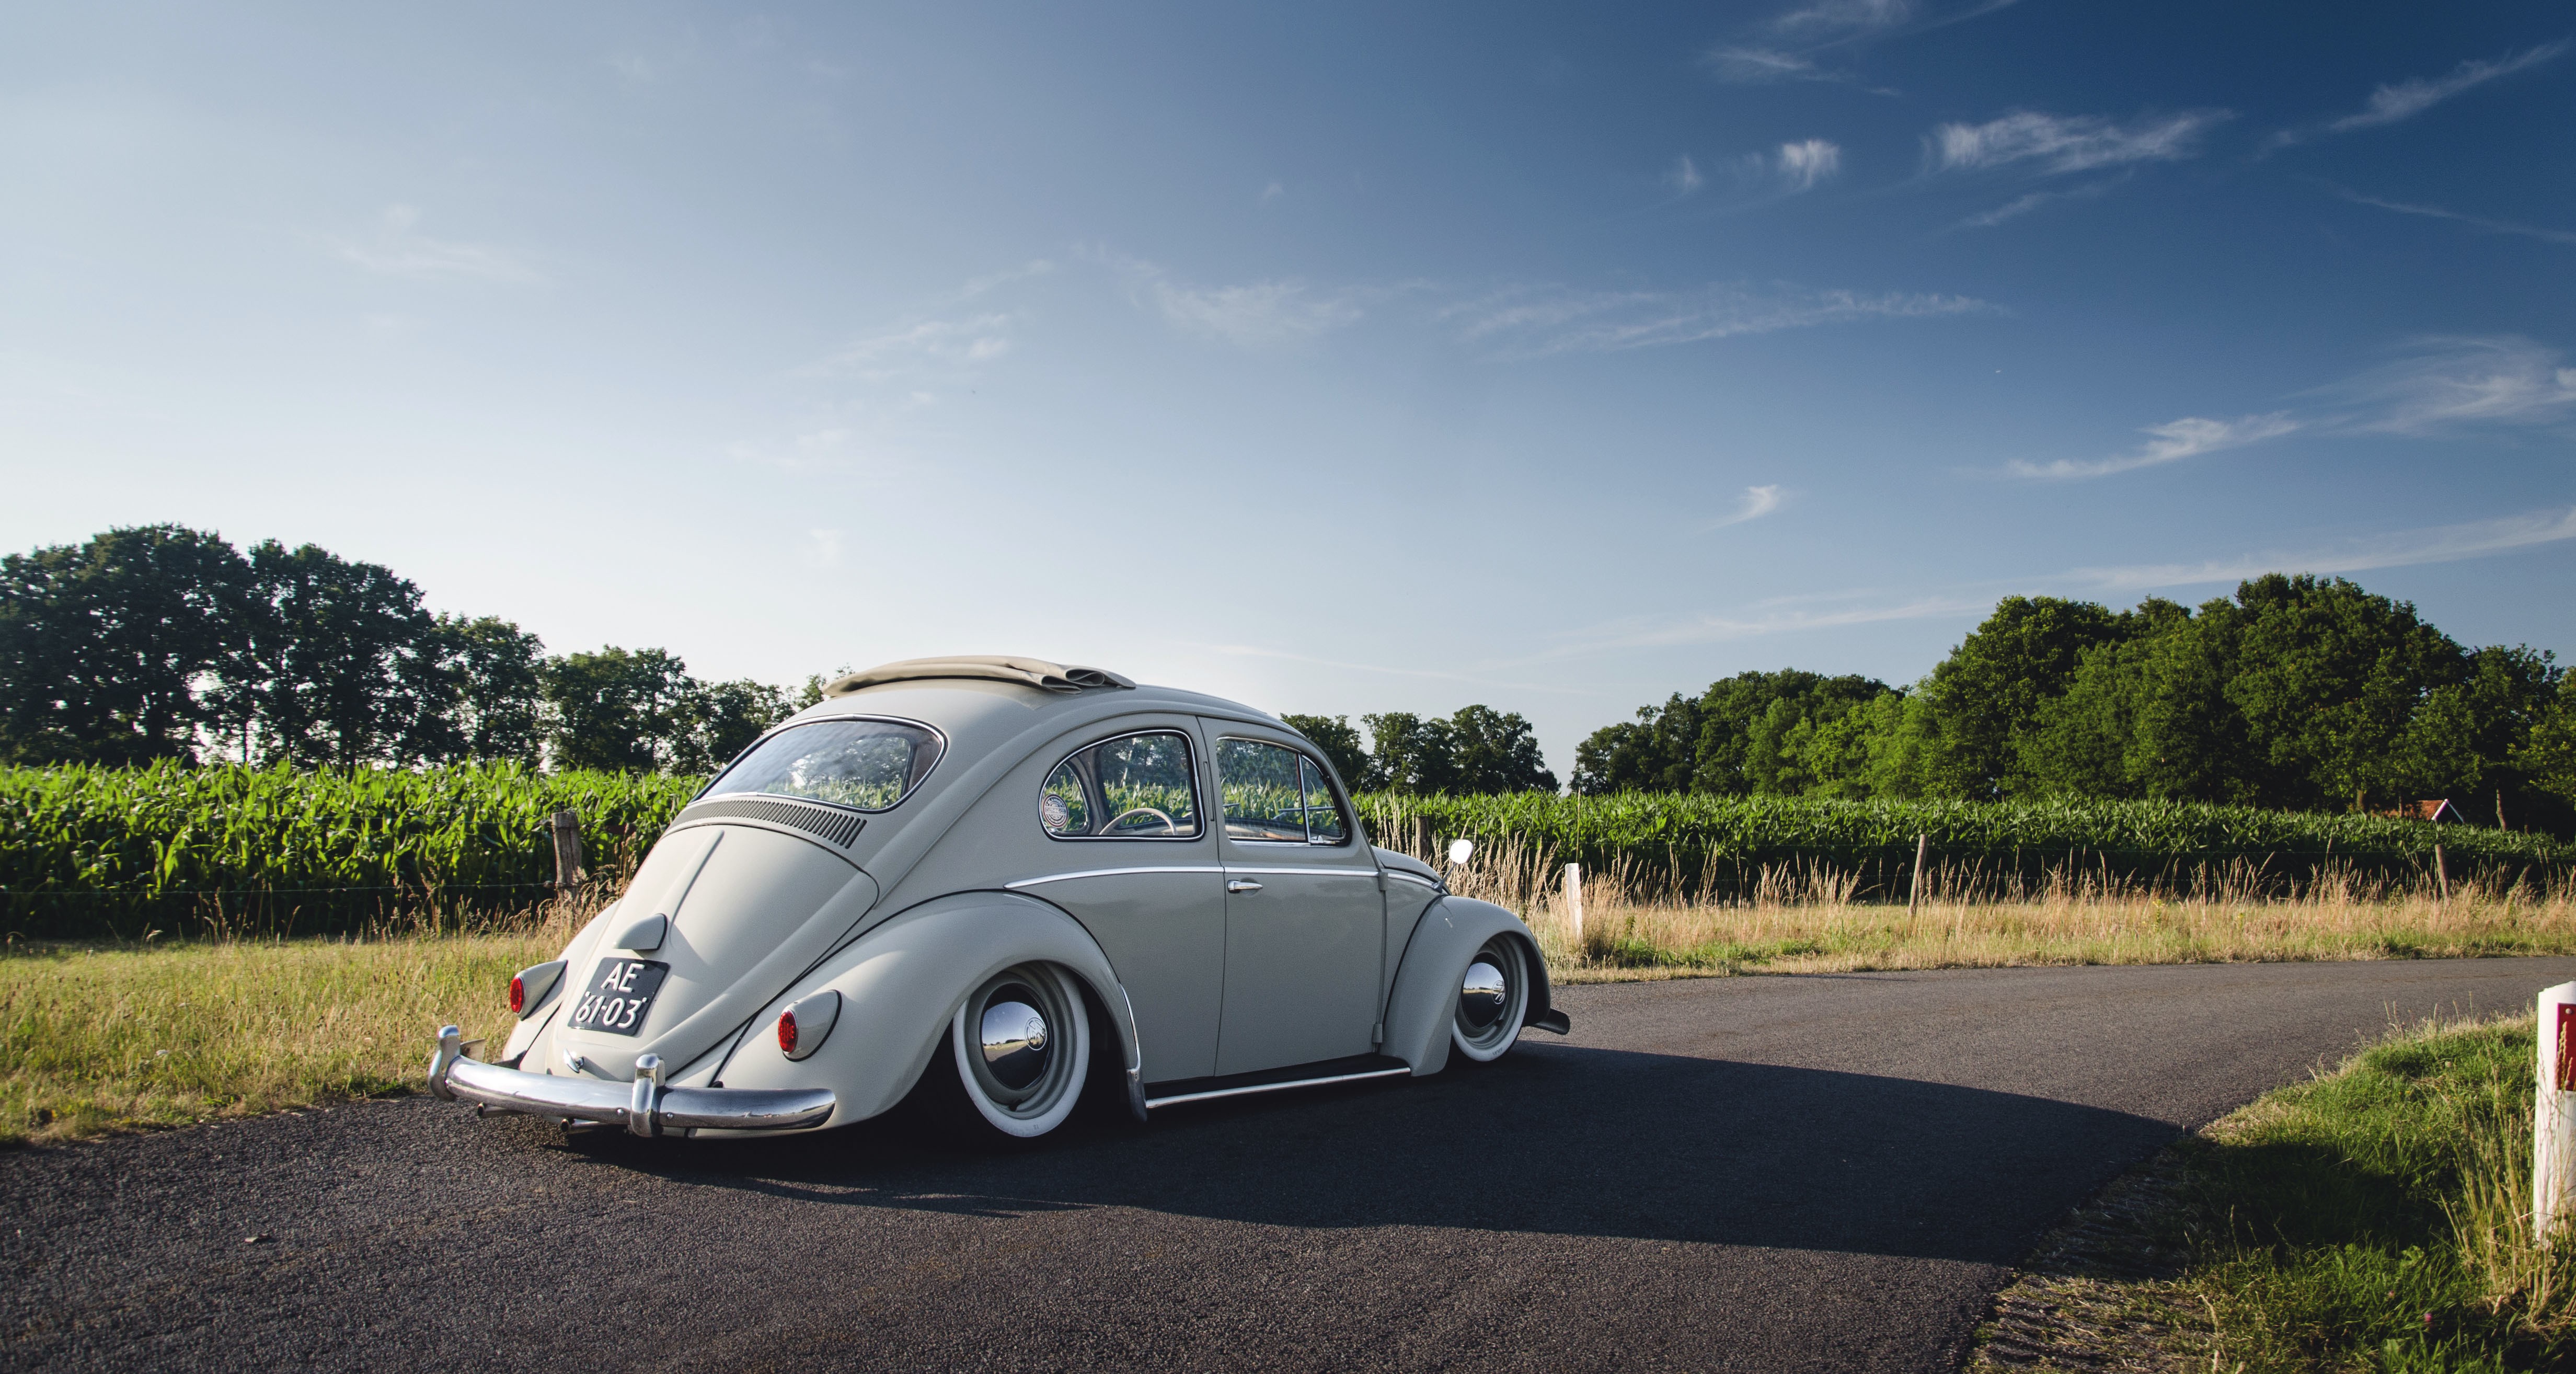 Hintergrundbilder fahrzeug volkswagen beetle tuning oldtimer rad landfahrzeug automobil